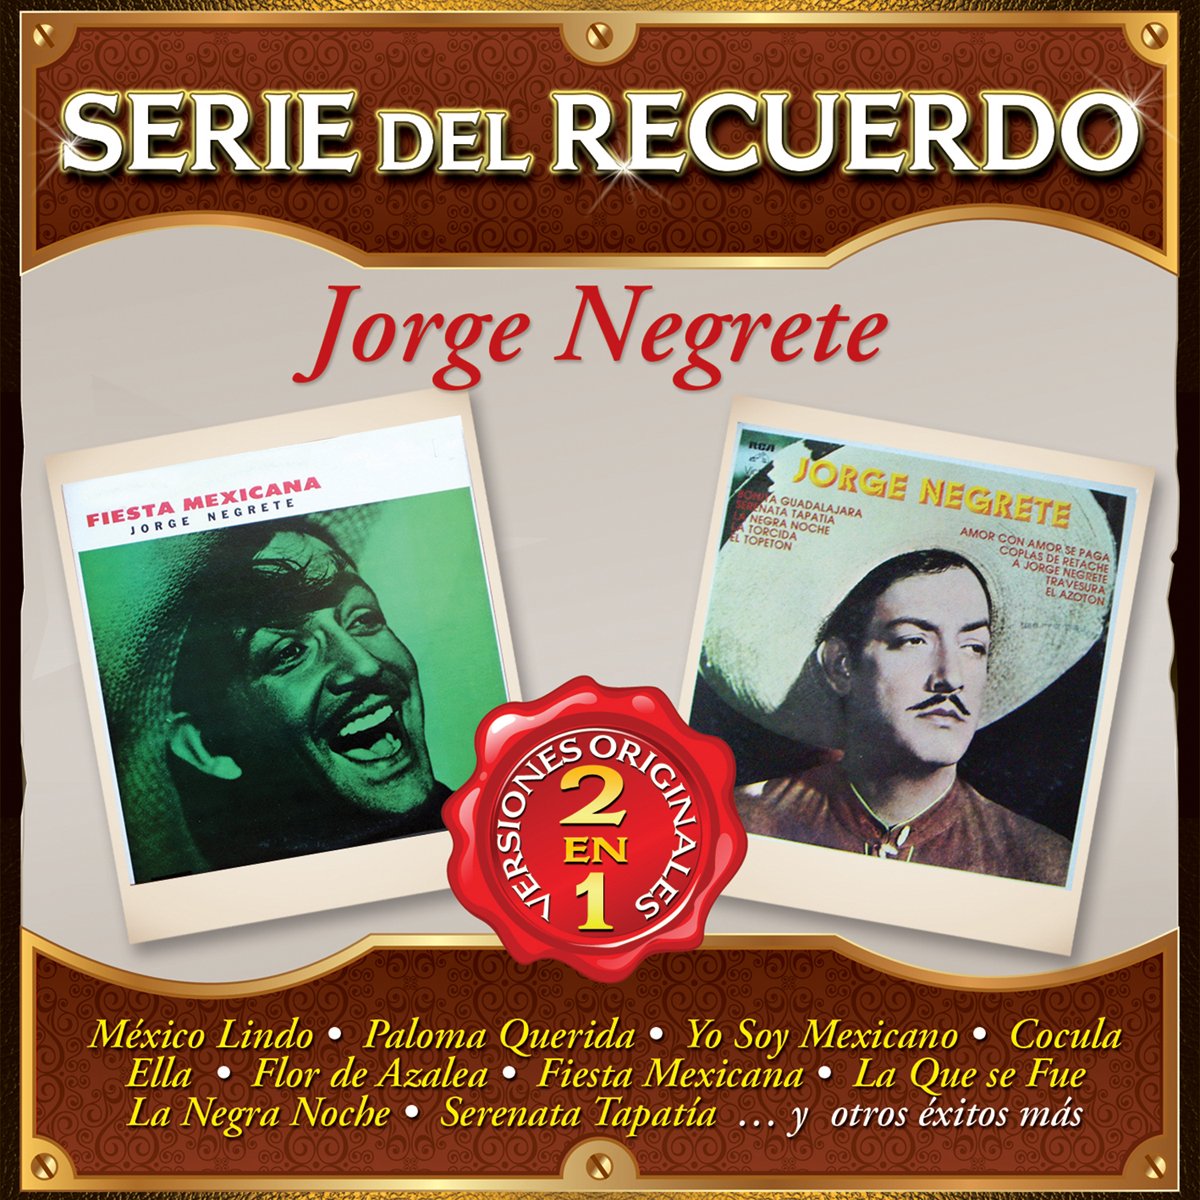 Cd Jorge Negrete Serie Del Recuerdo 2 en 1